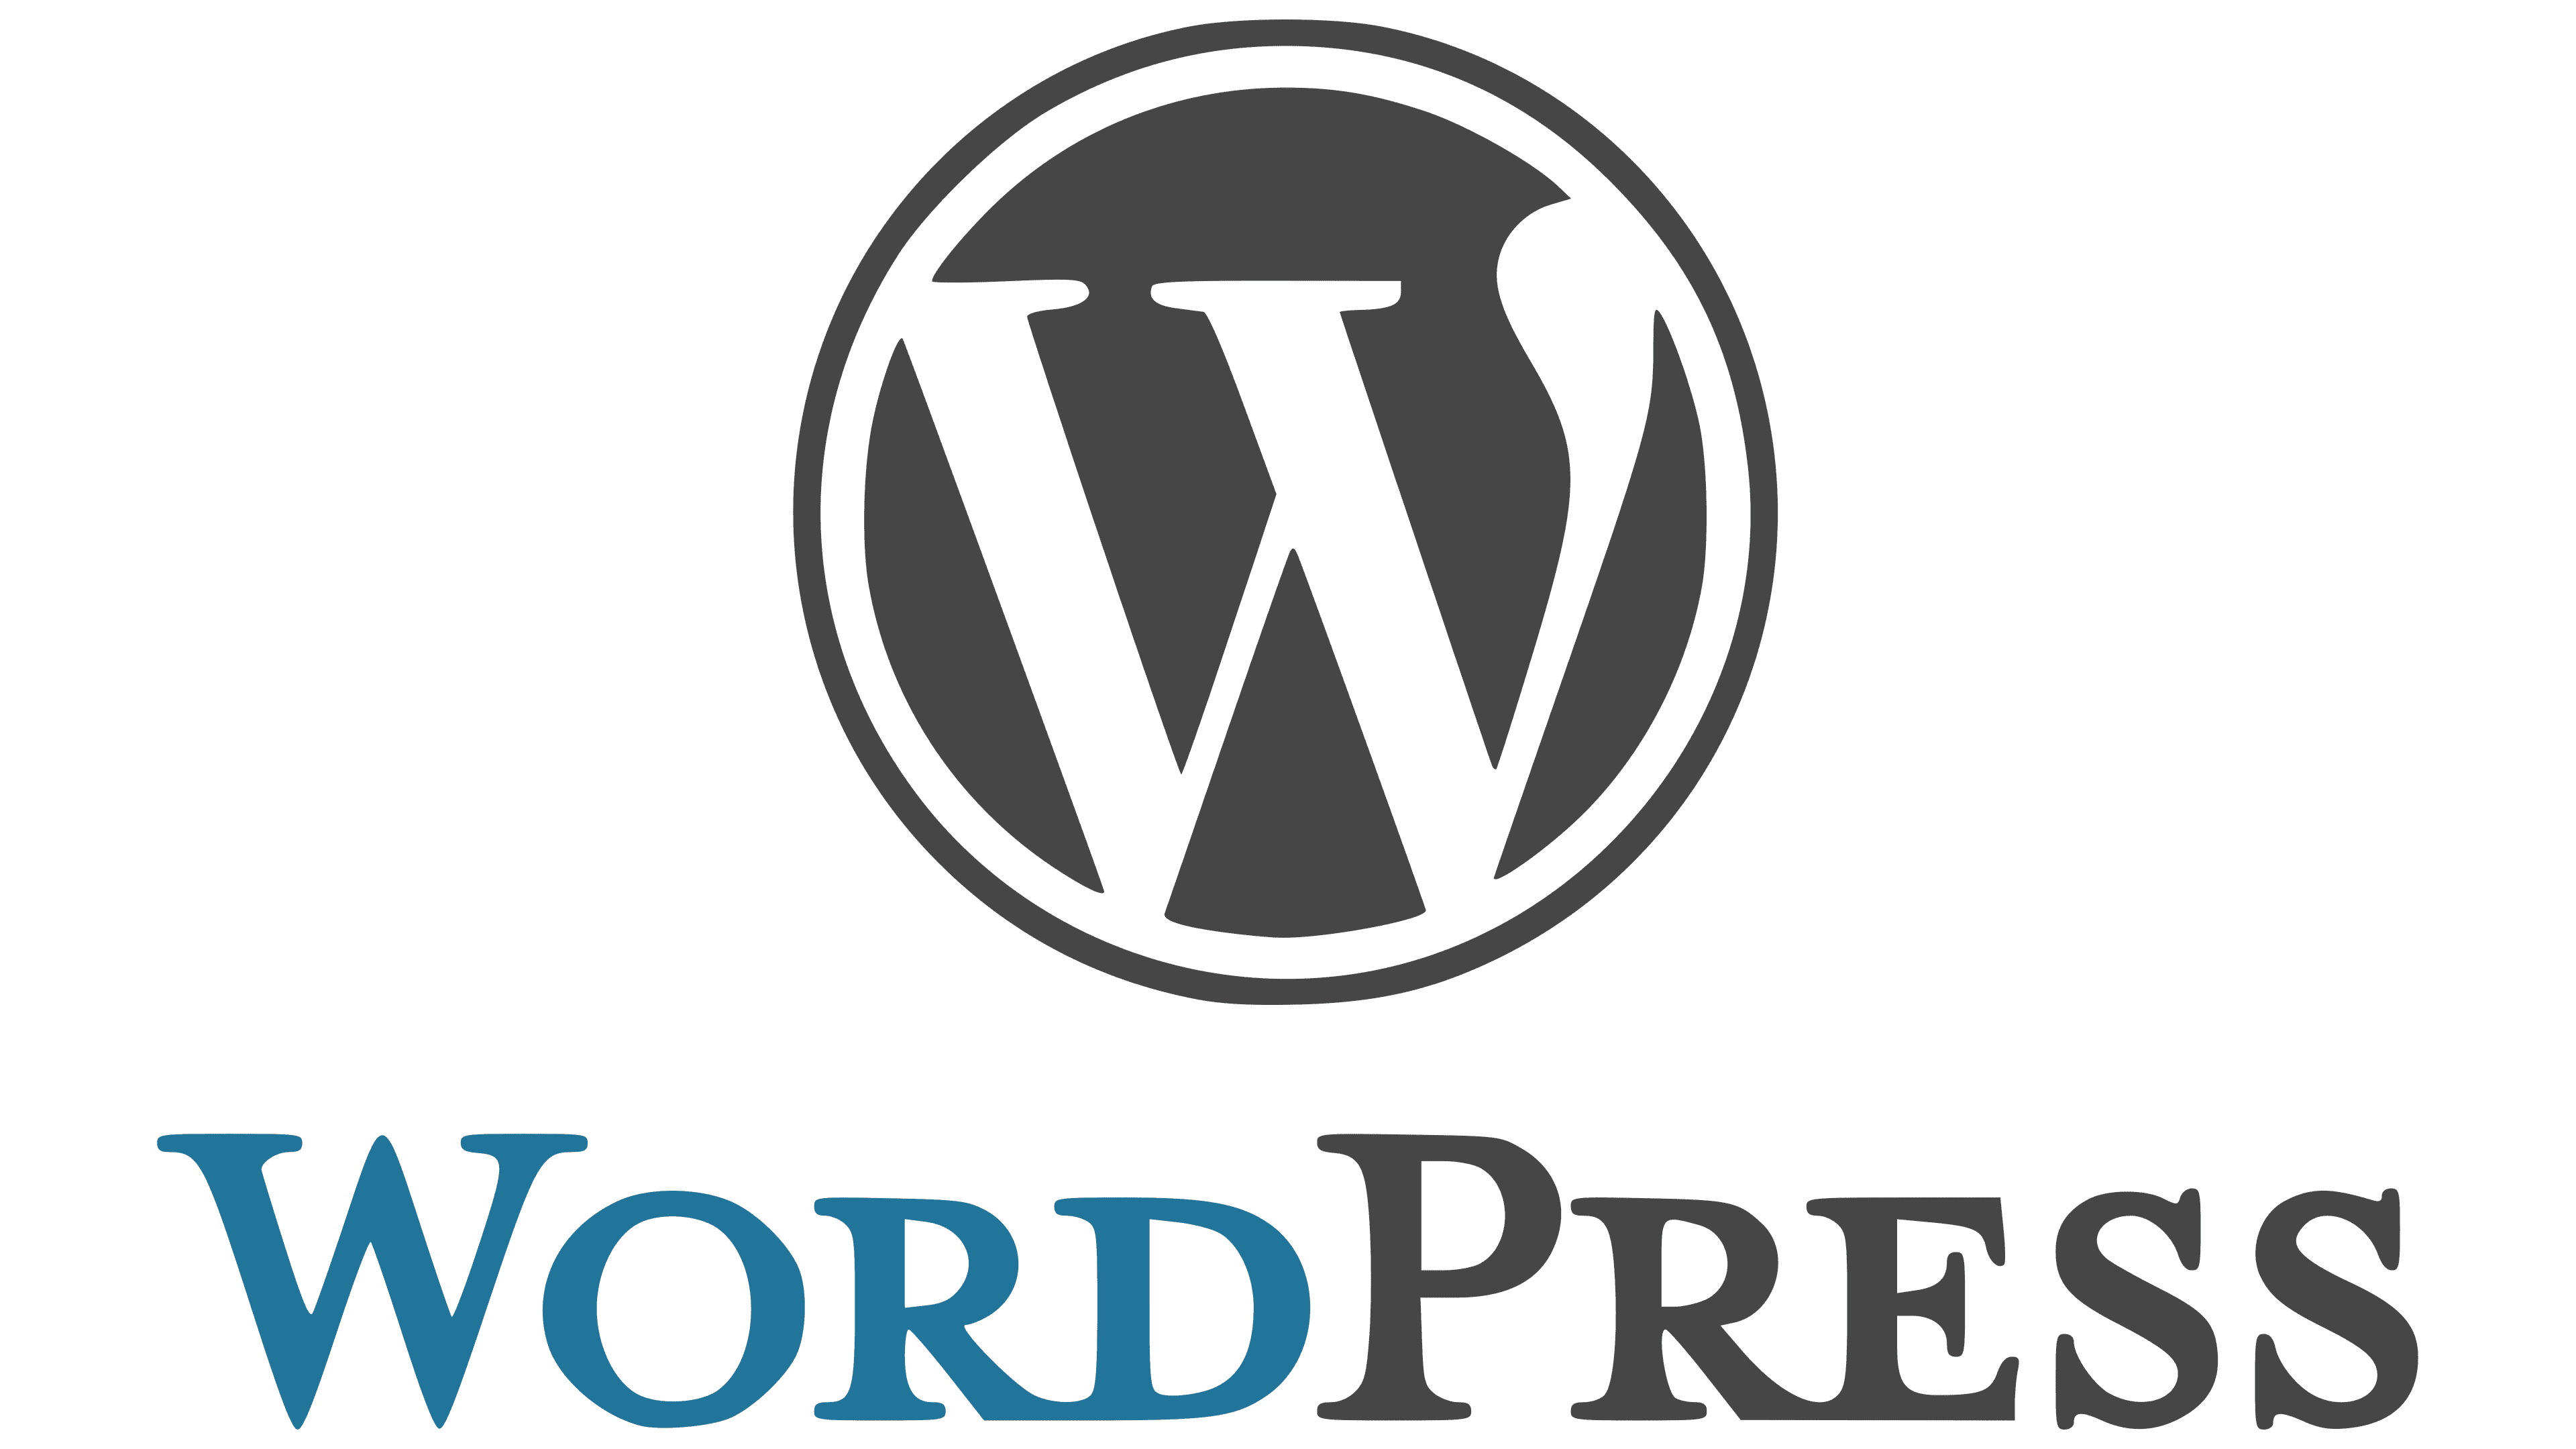 Affordable WordPress Web Design